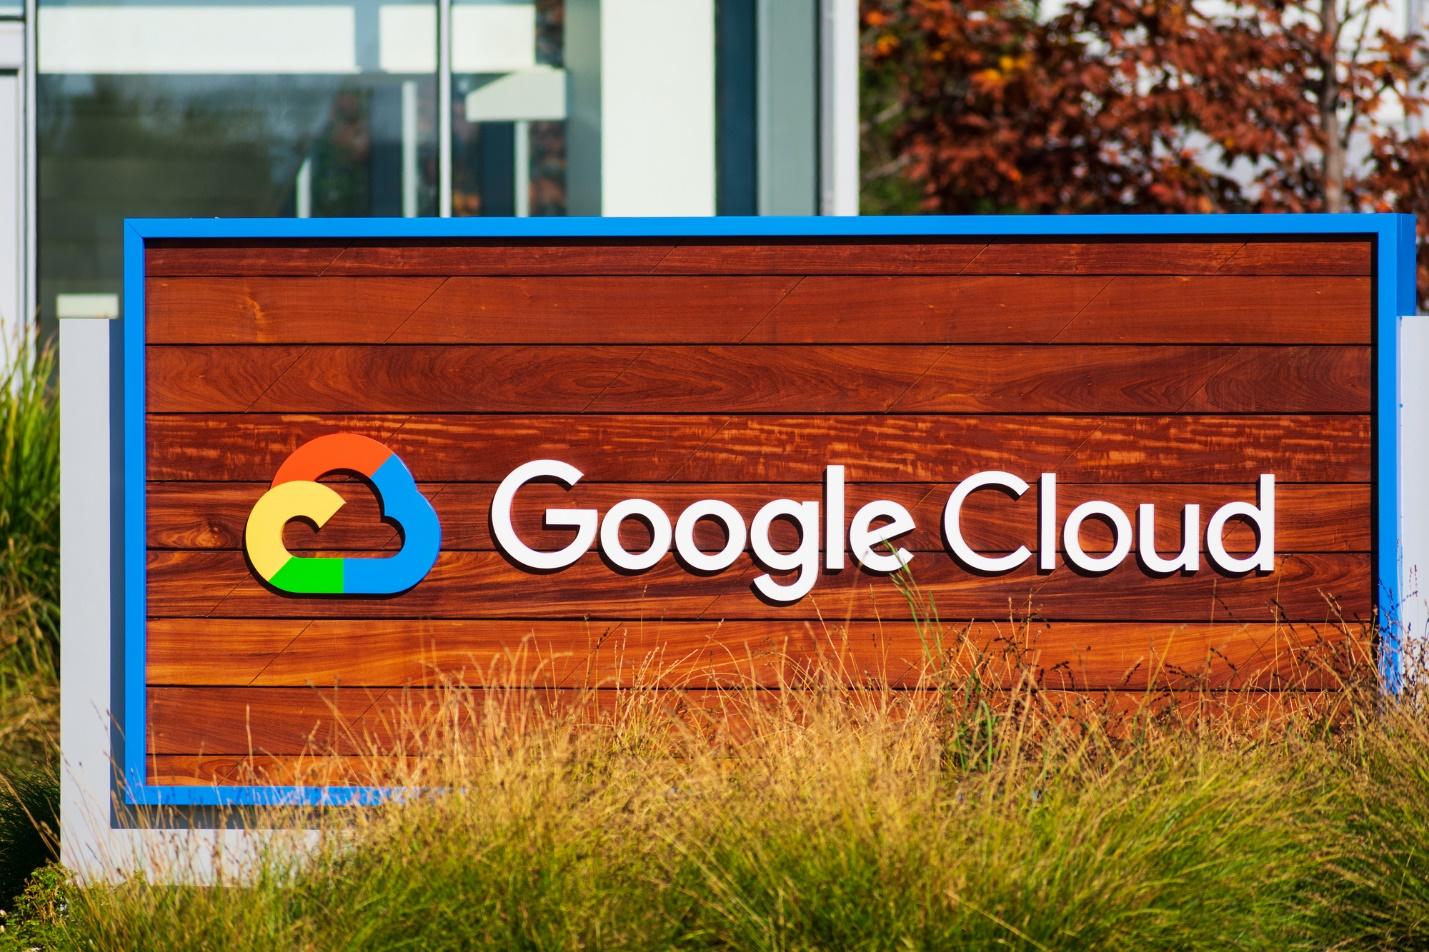 Google Cloud Infrastructure